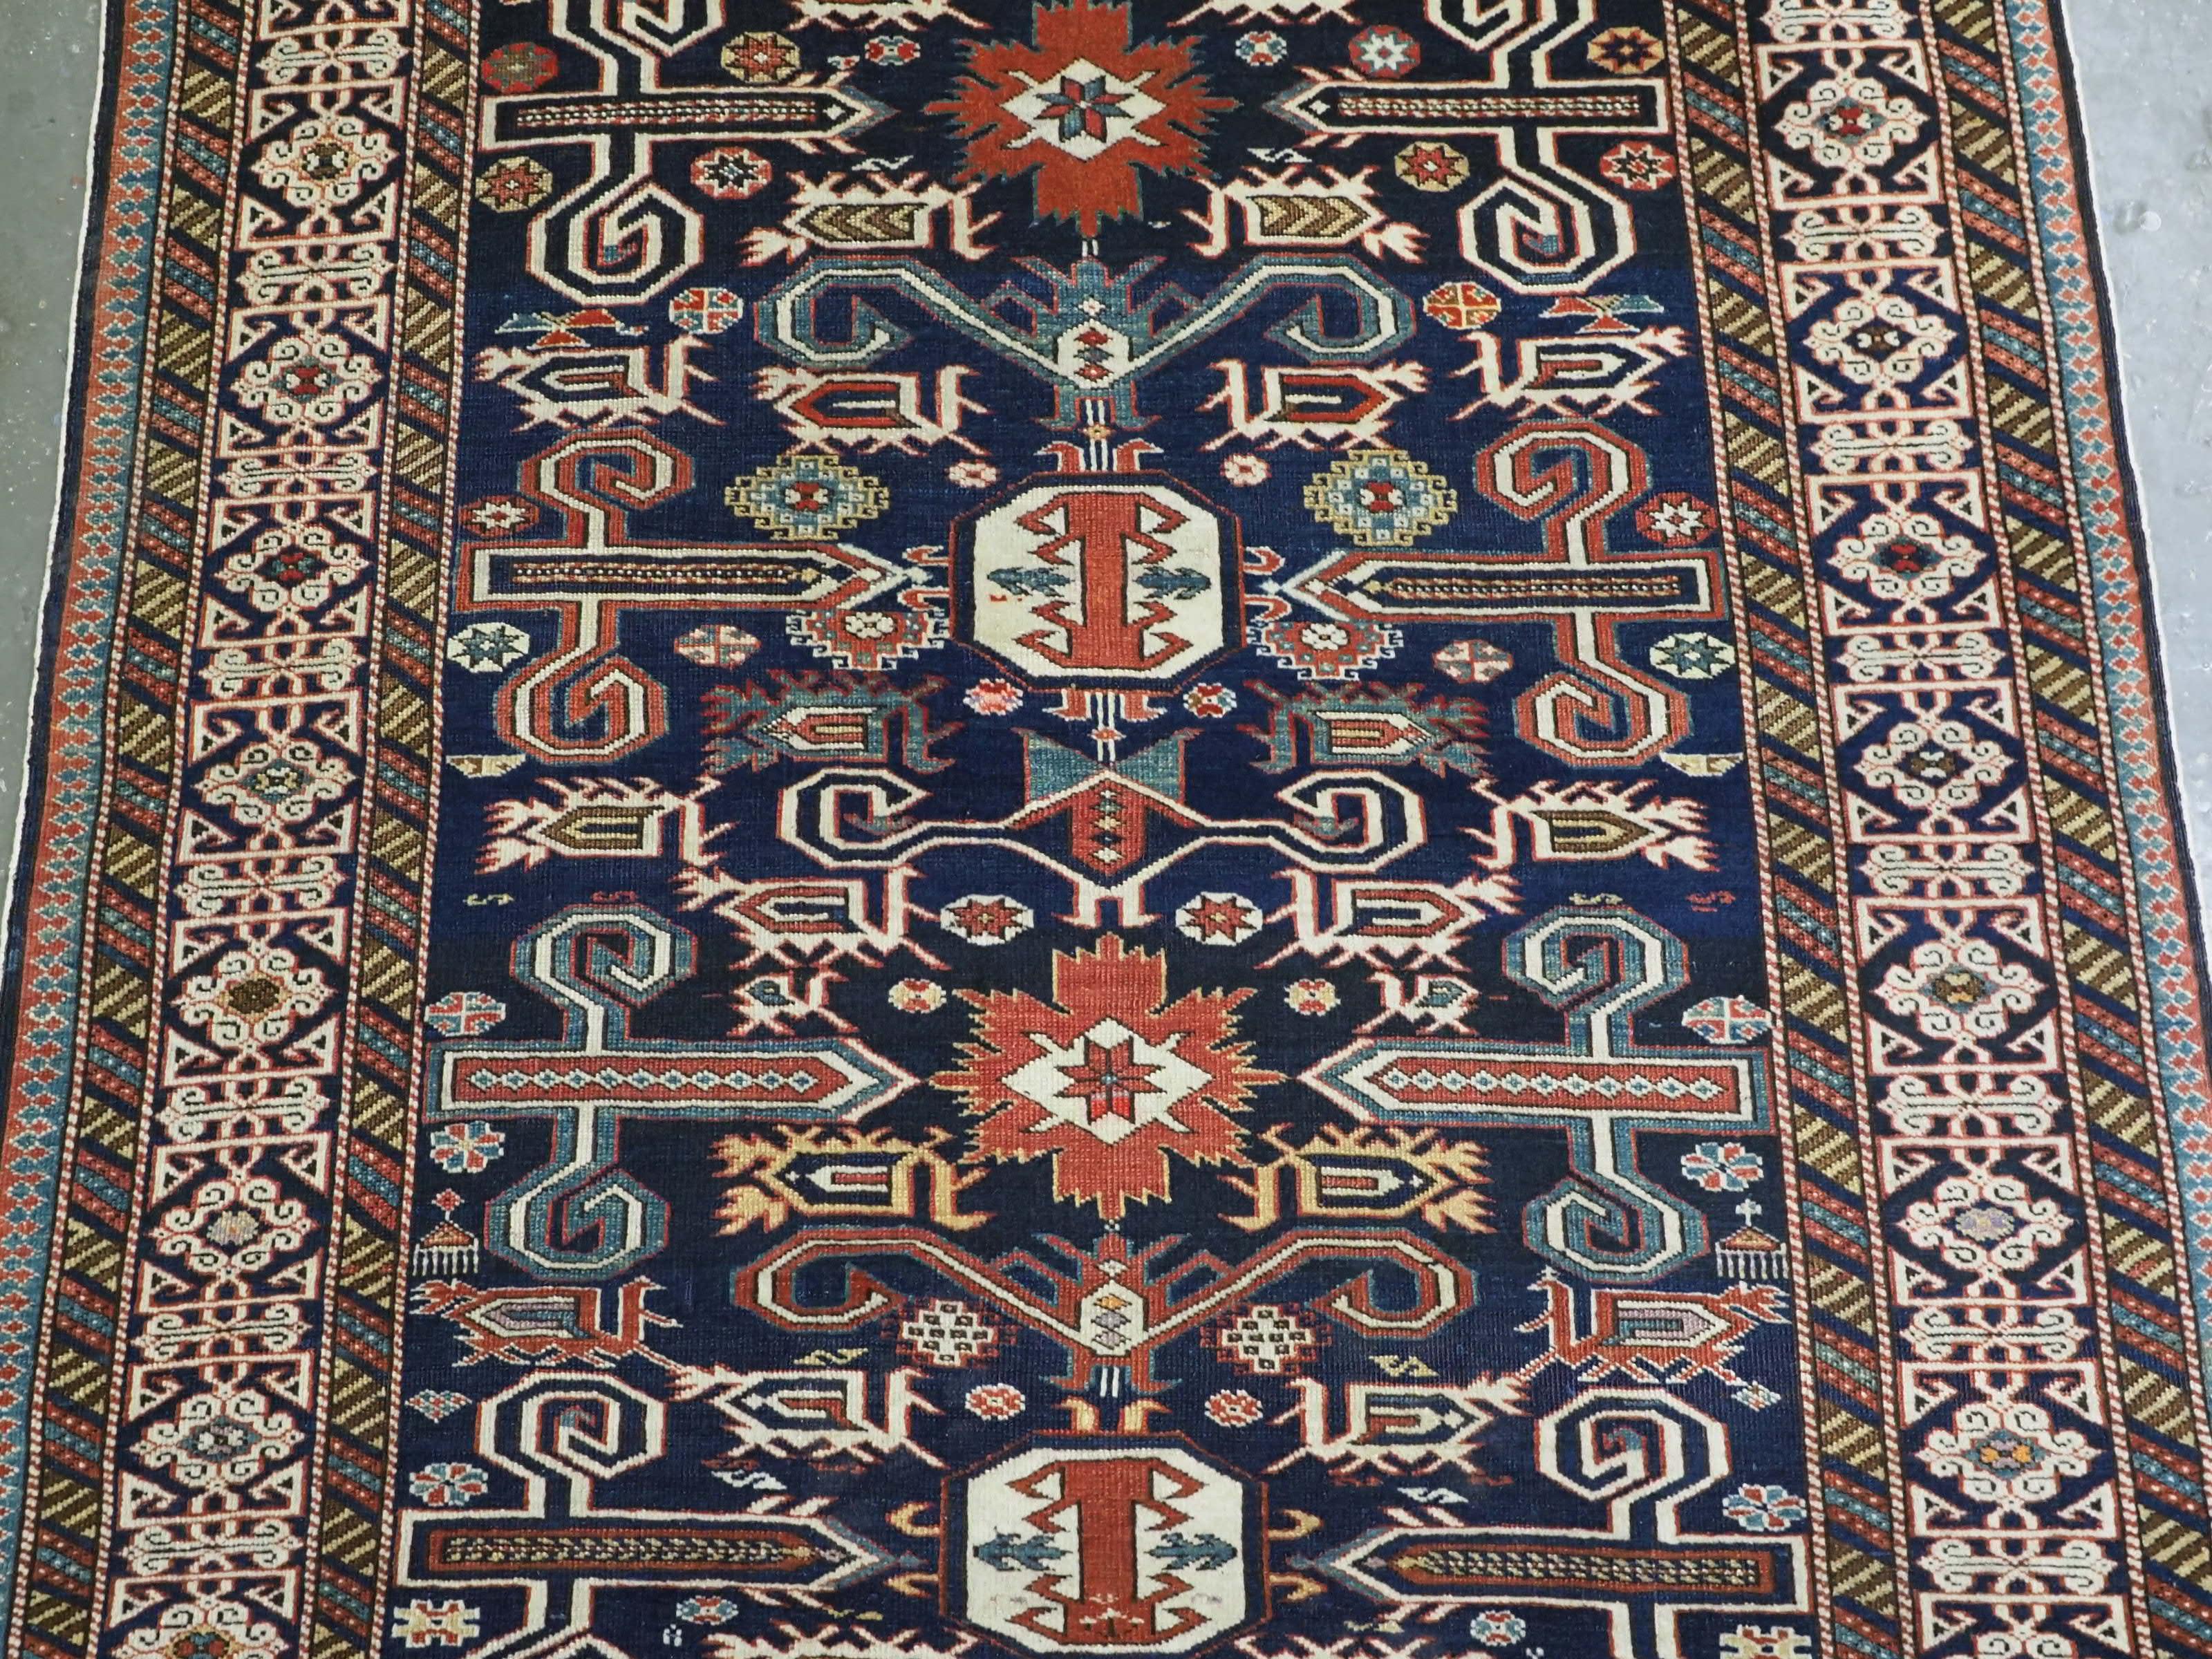 Late 19th Century Antique Caucasian Kuba region Perepedil rug with an indigo blue ground. For Sale